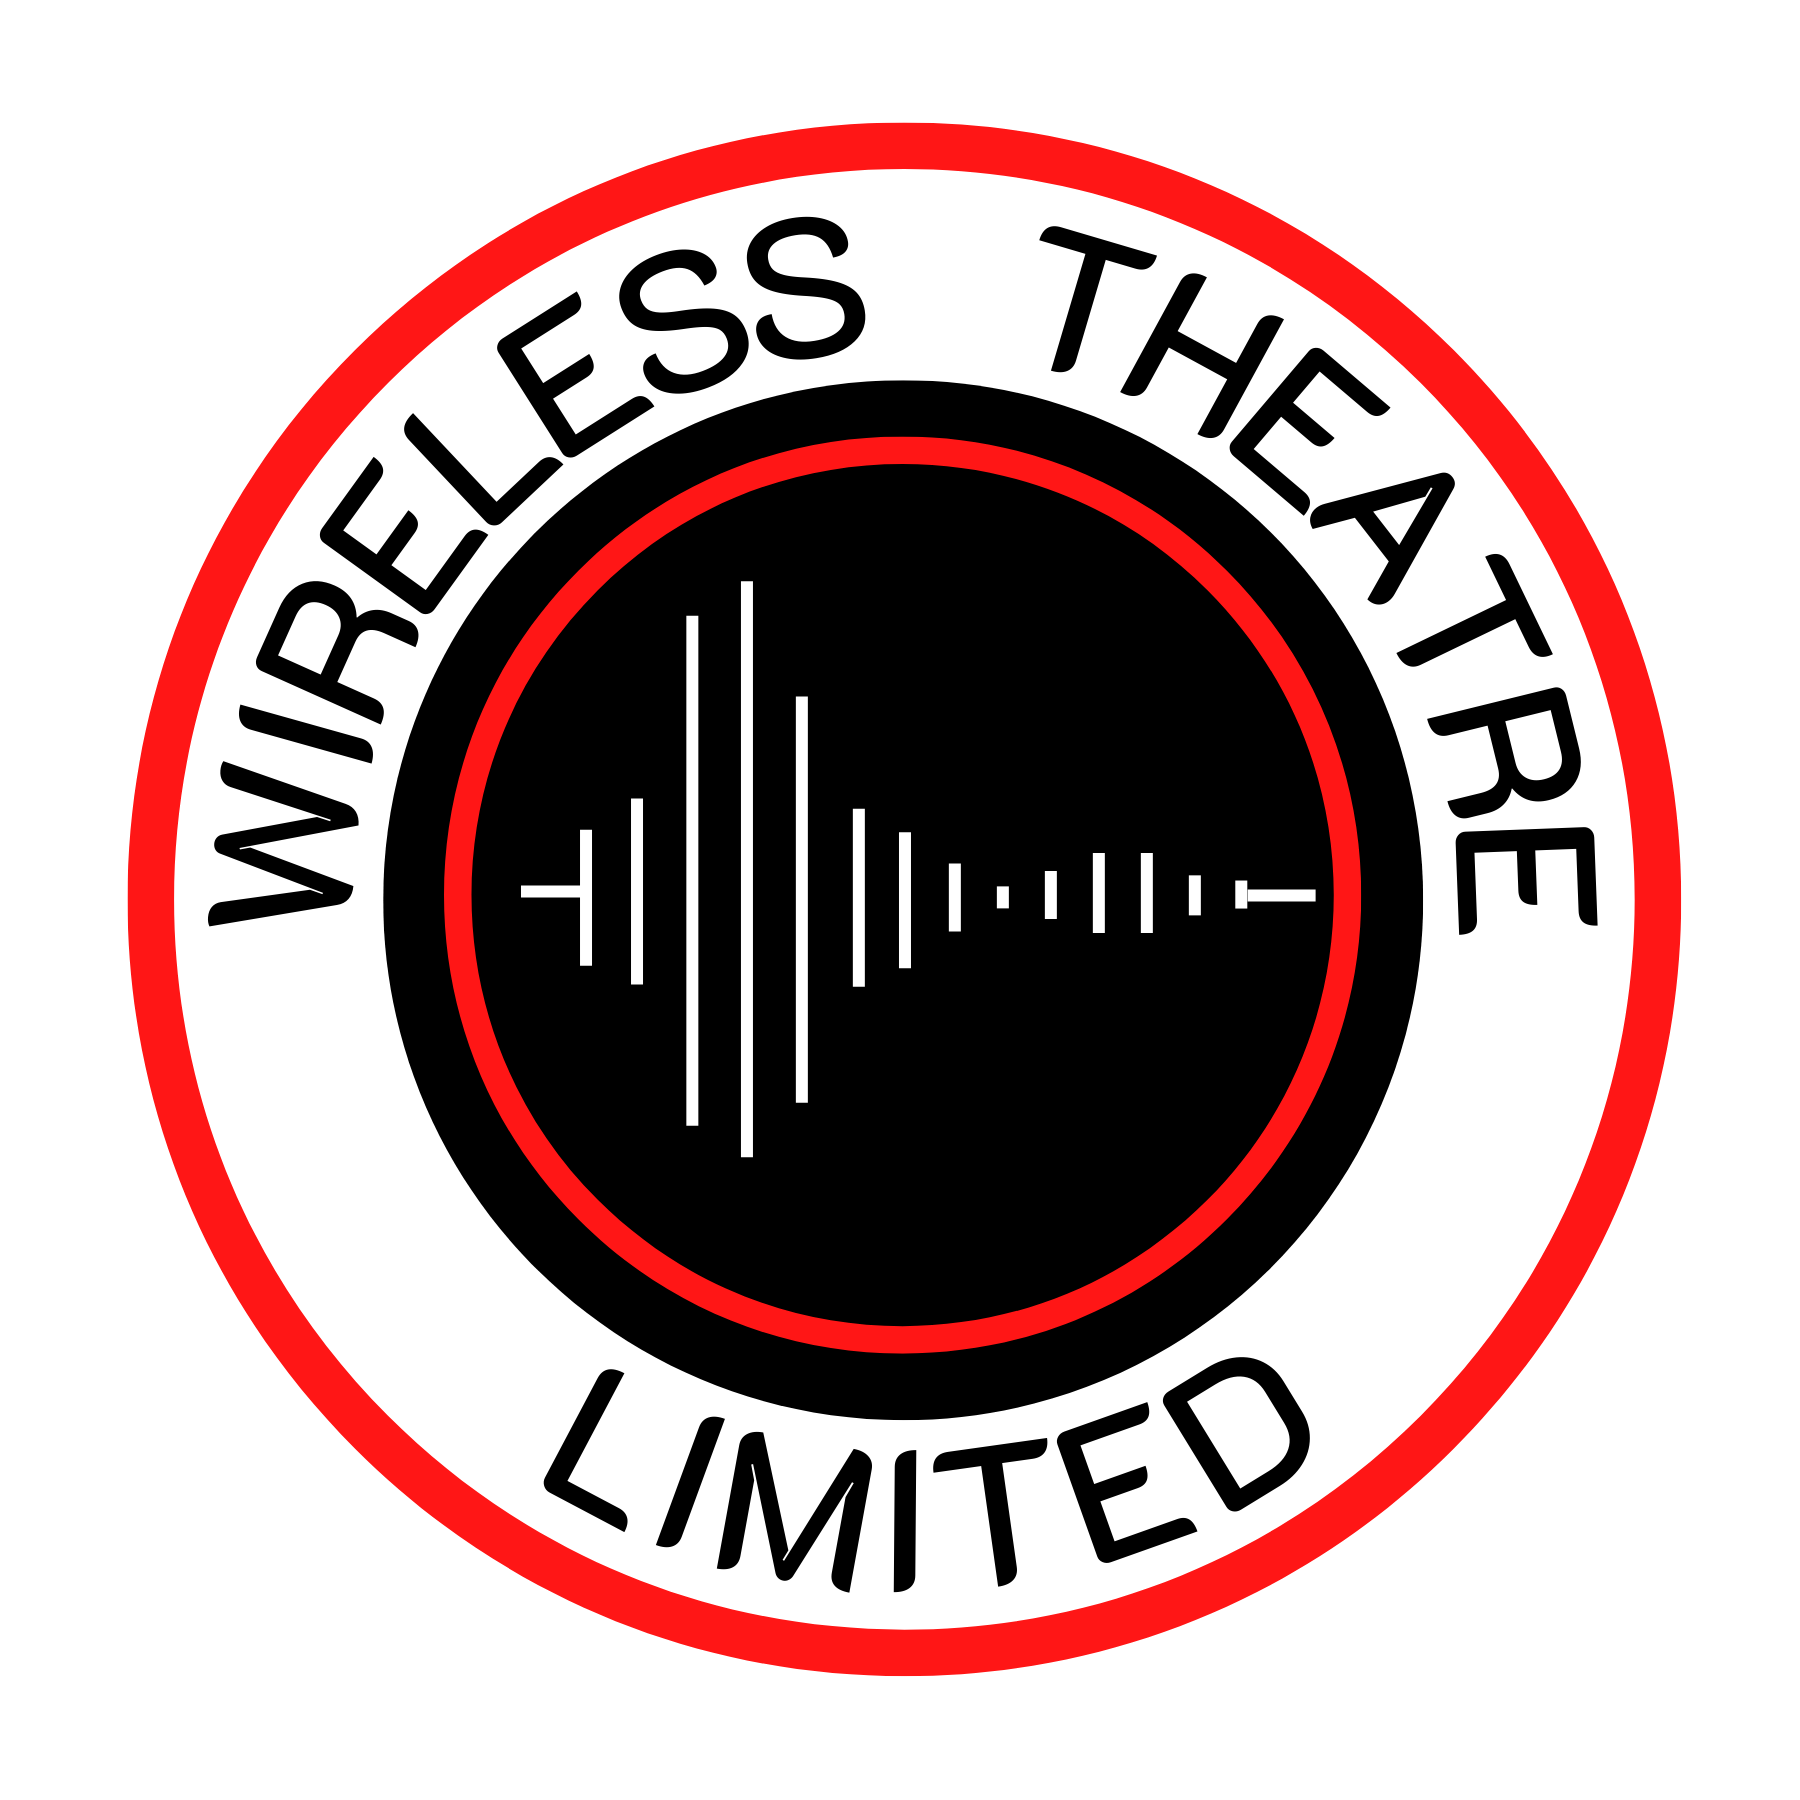 Wireless Theatre Ltd Show Notes